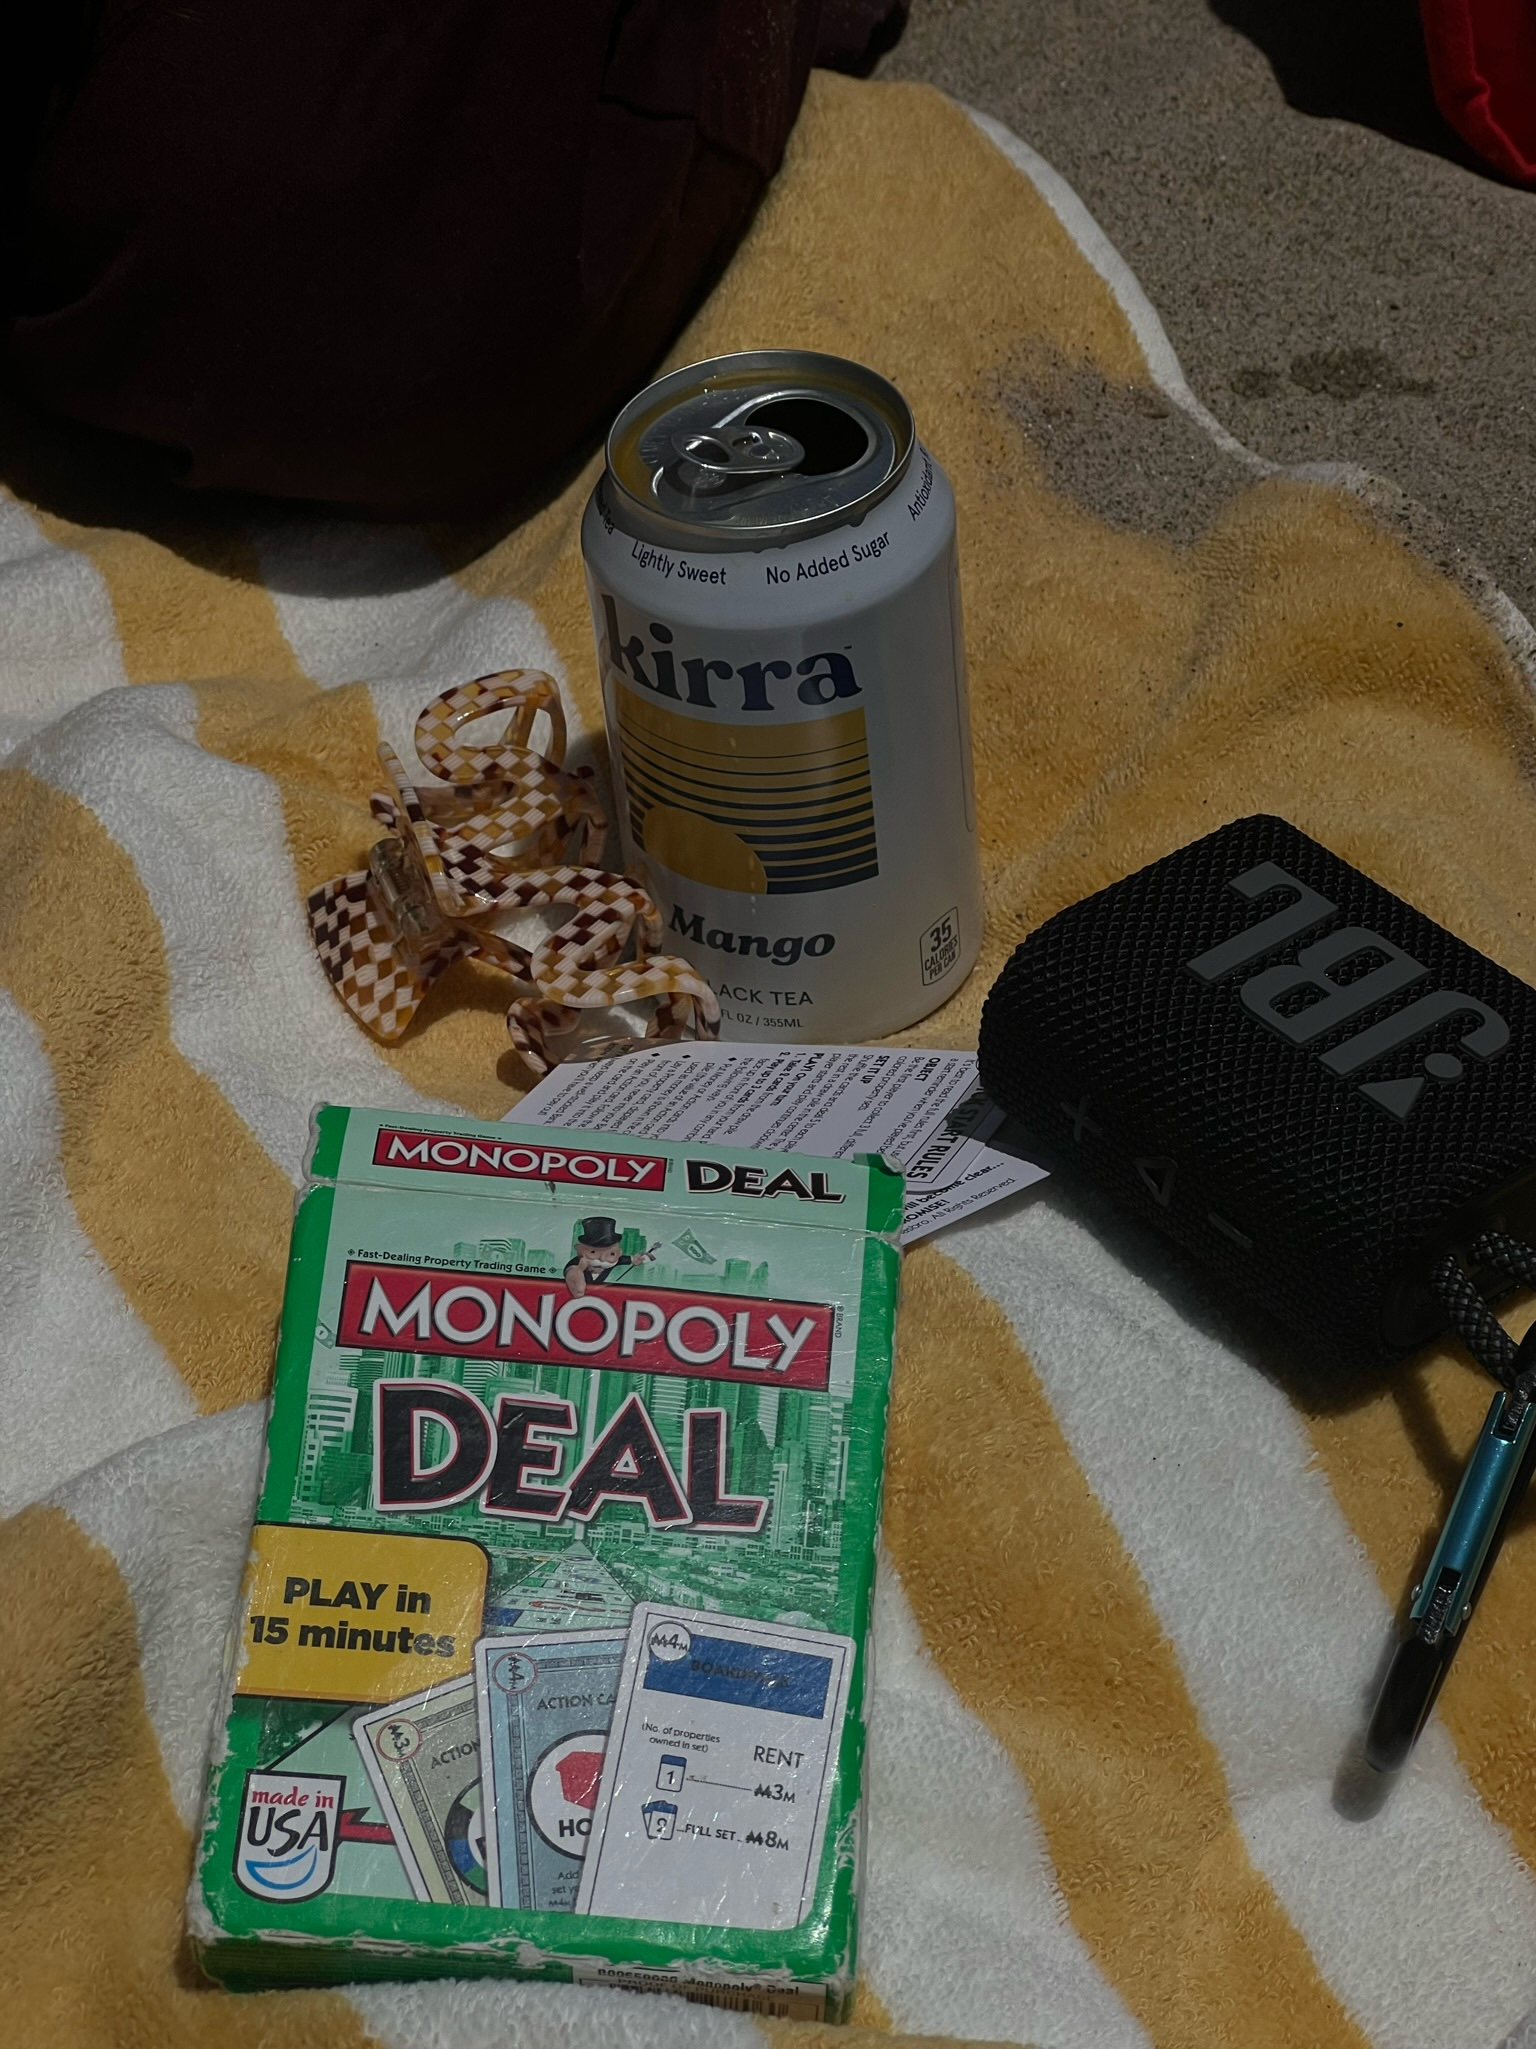 Monopoly Deal Kirra